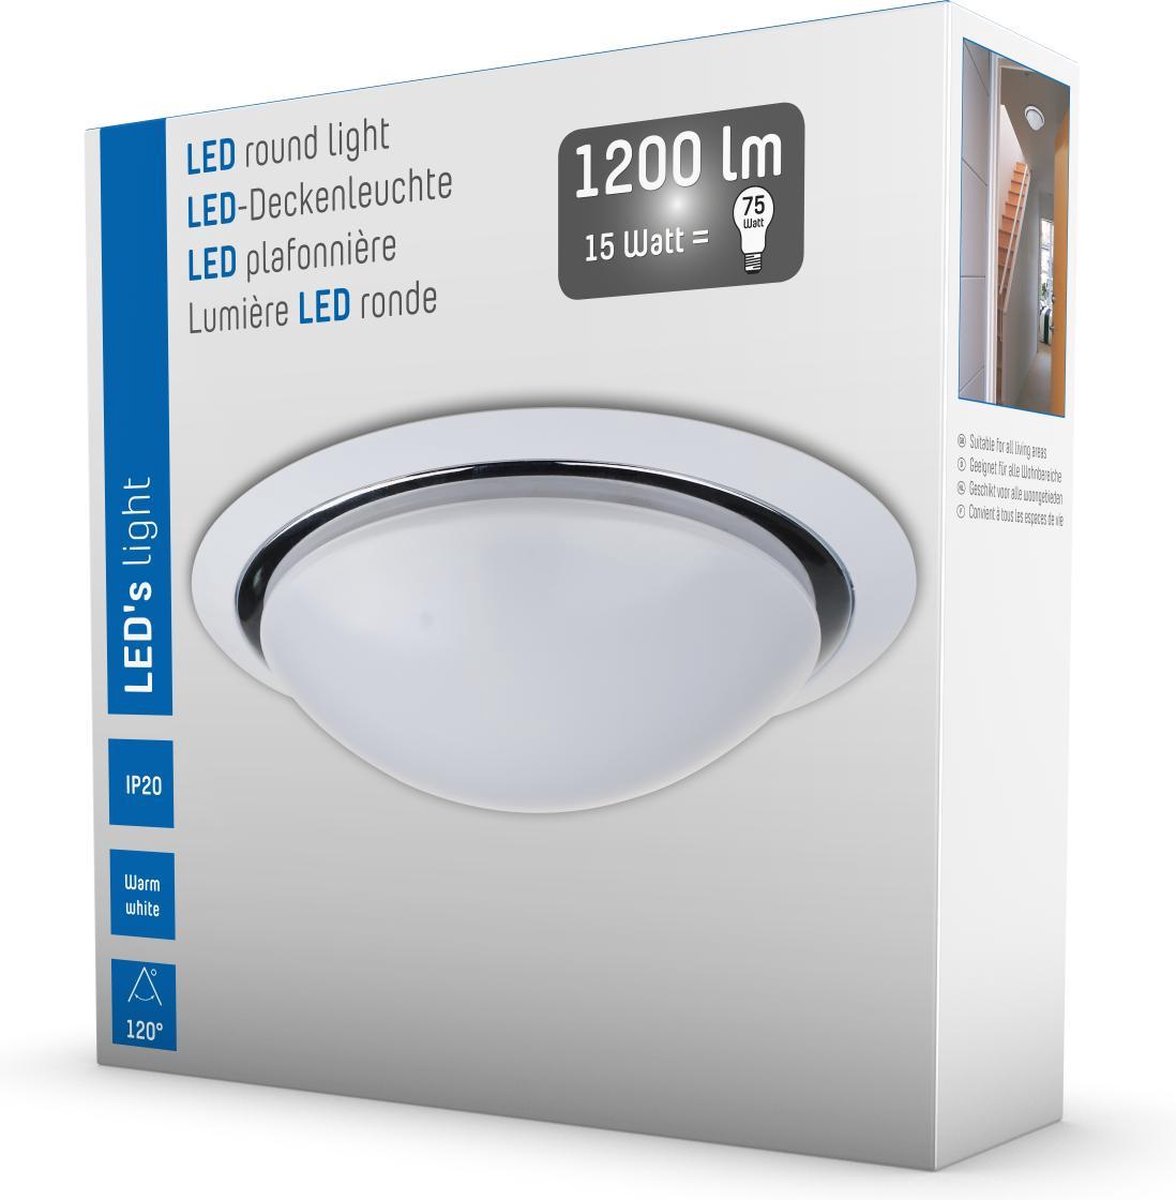 LED's Light plafondlamp LUXURY 15W √ò35cm bol.com